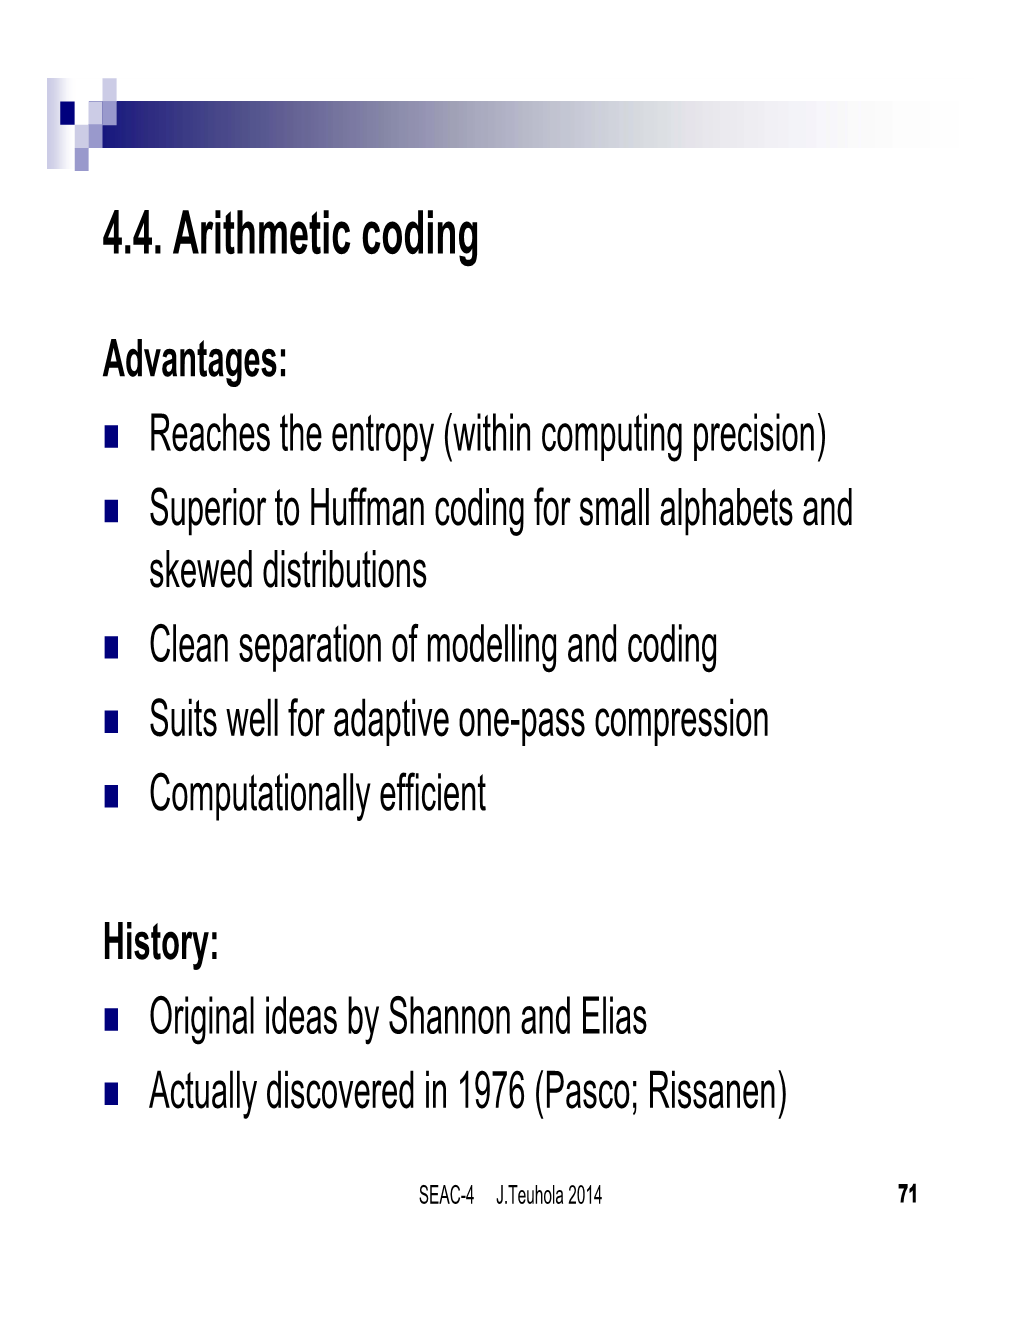 4.4. Arithmetic Coding